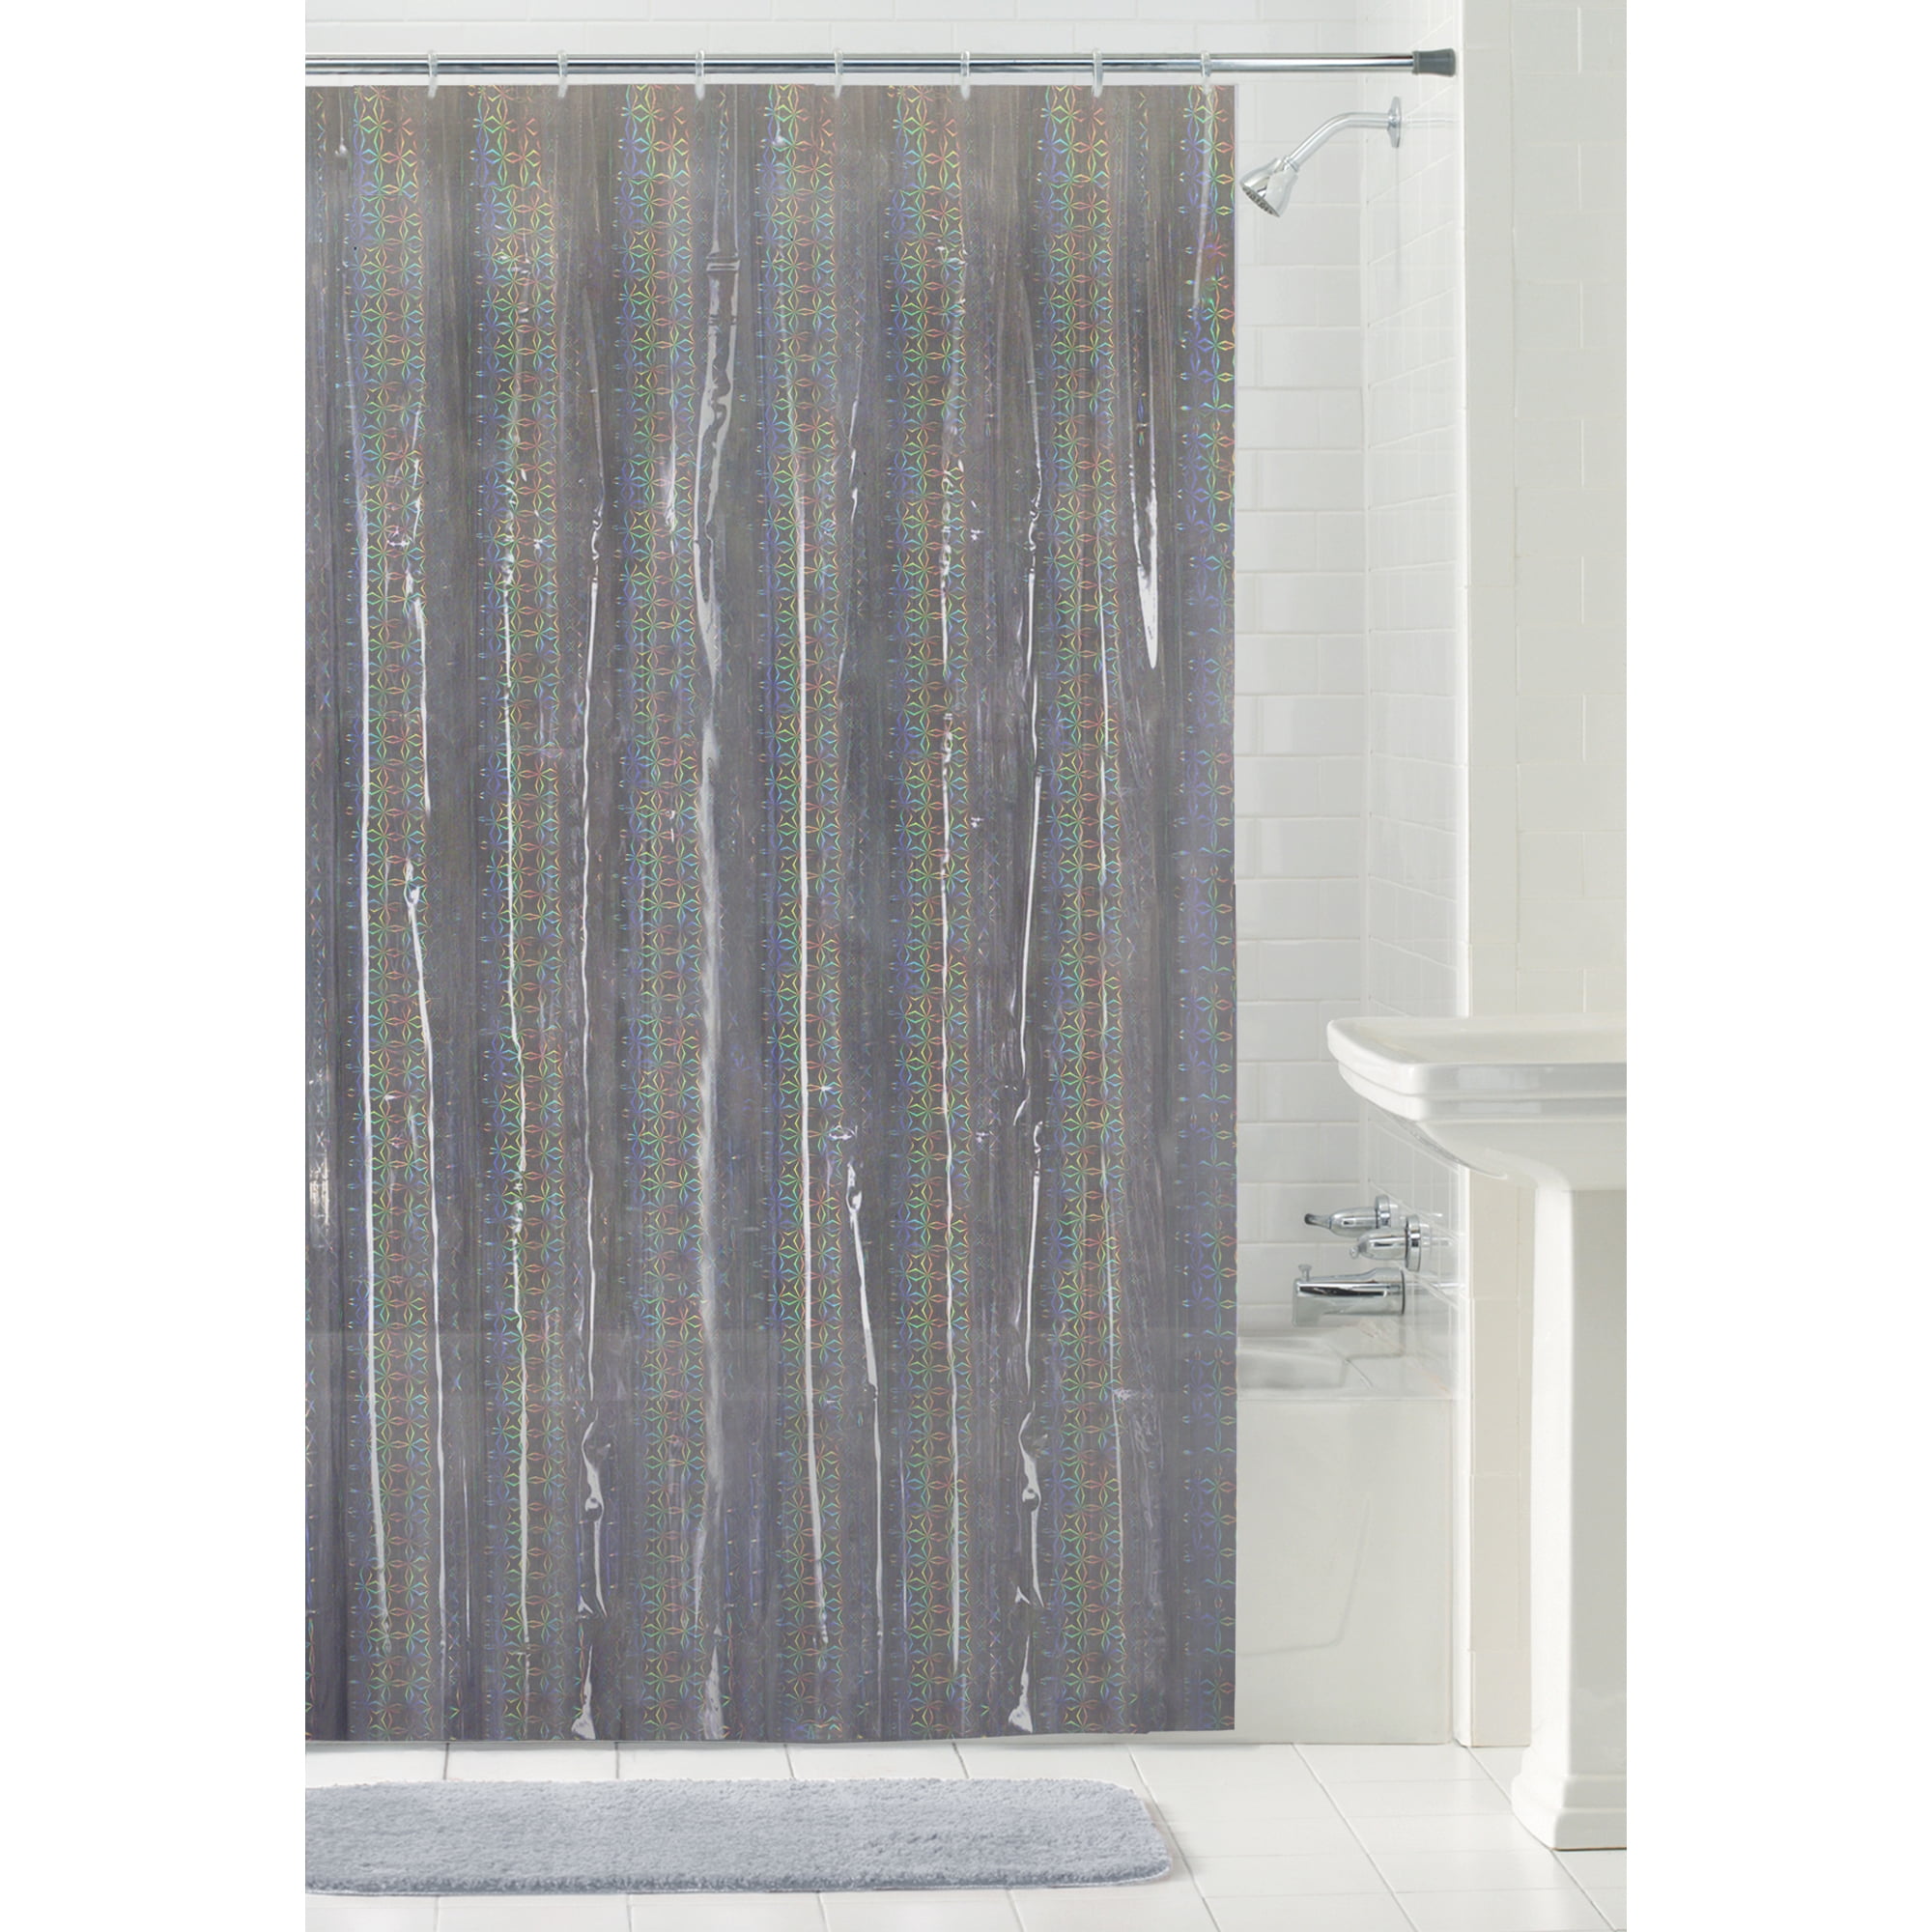 Mainstays Luminous Extra Long Peva, Extra Long Fabric Shower Curtain Liner 84